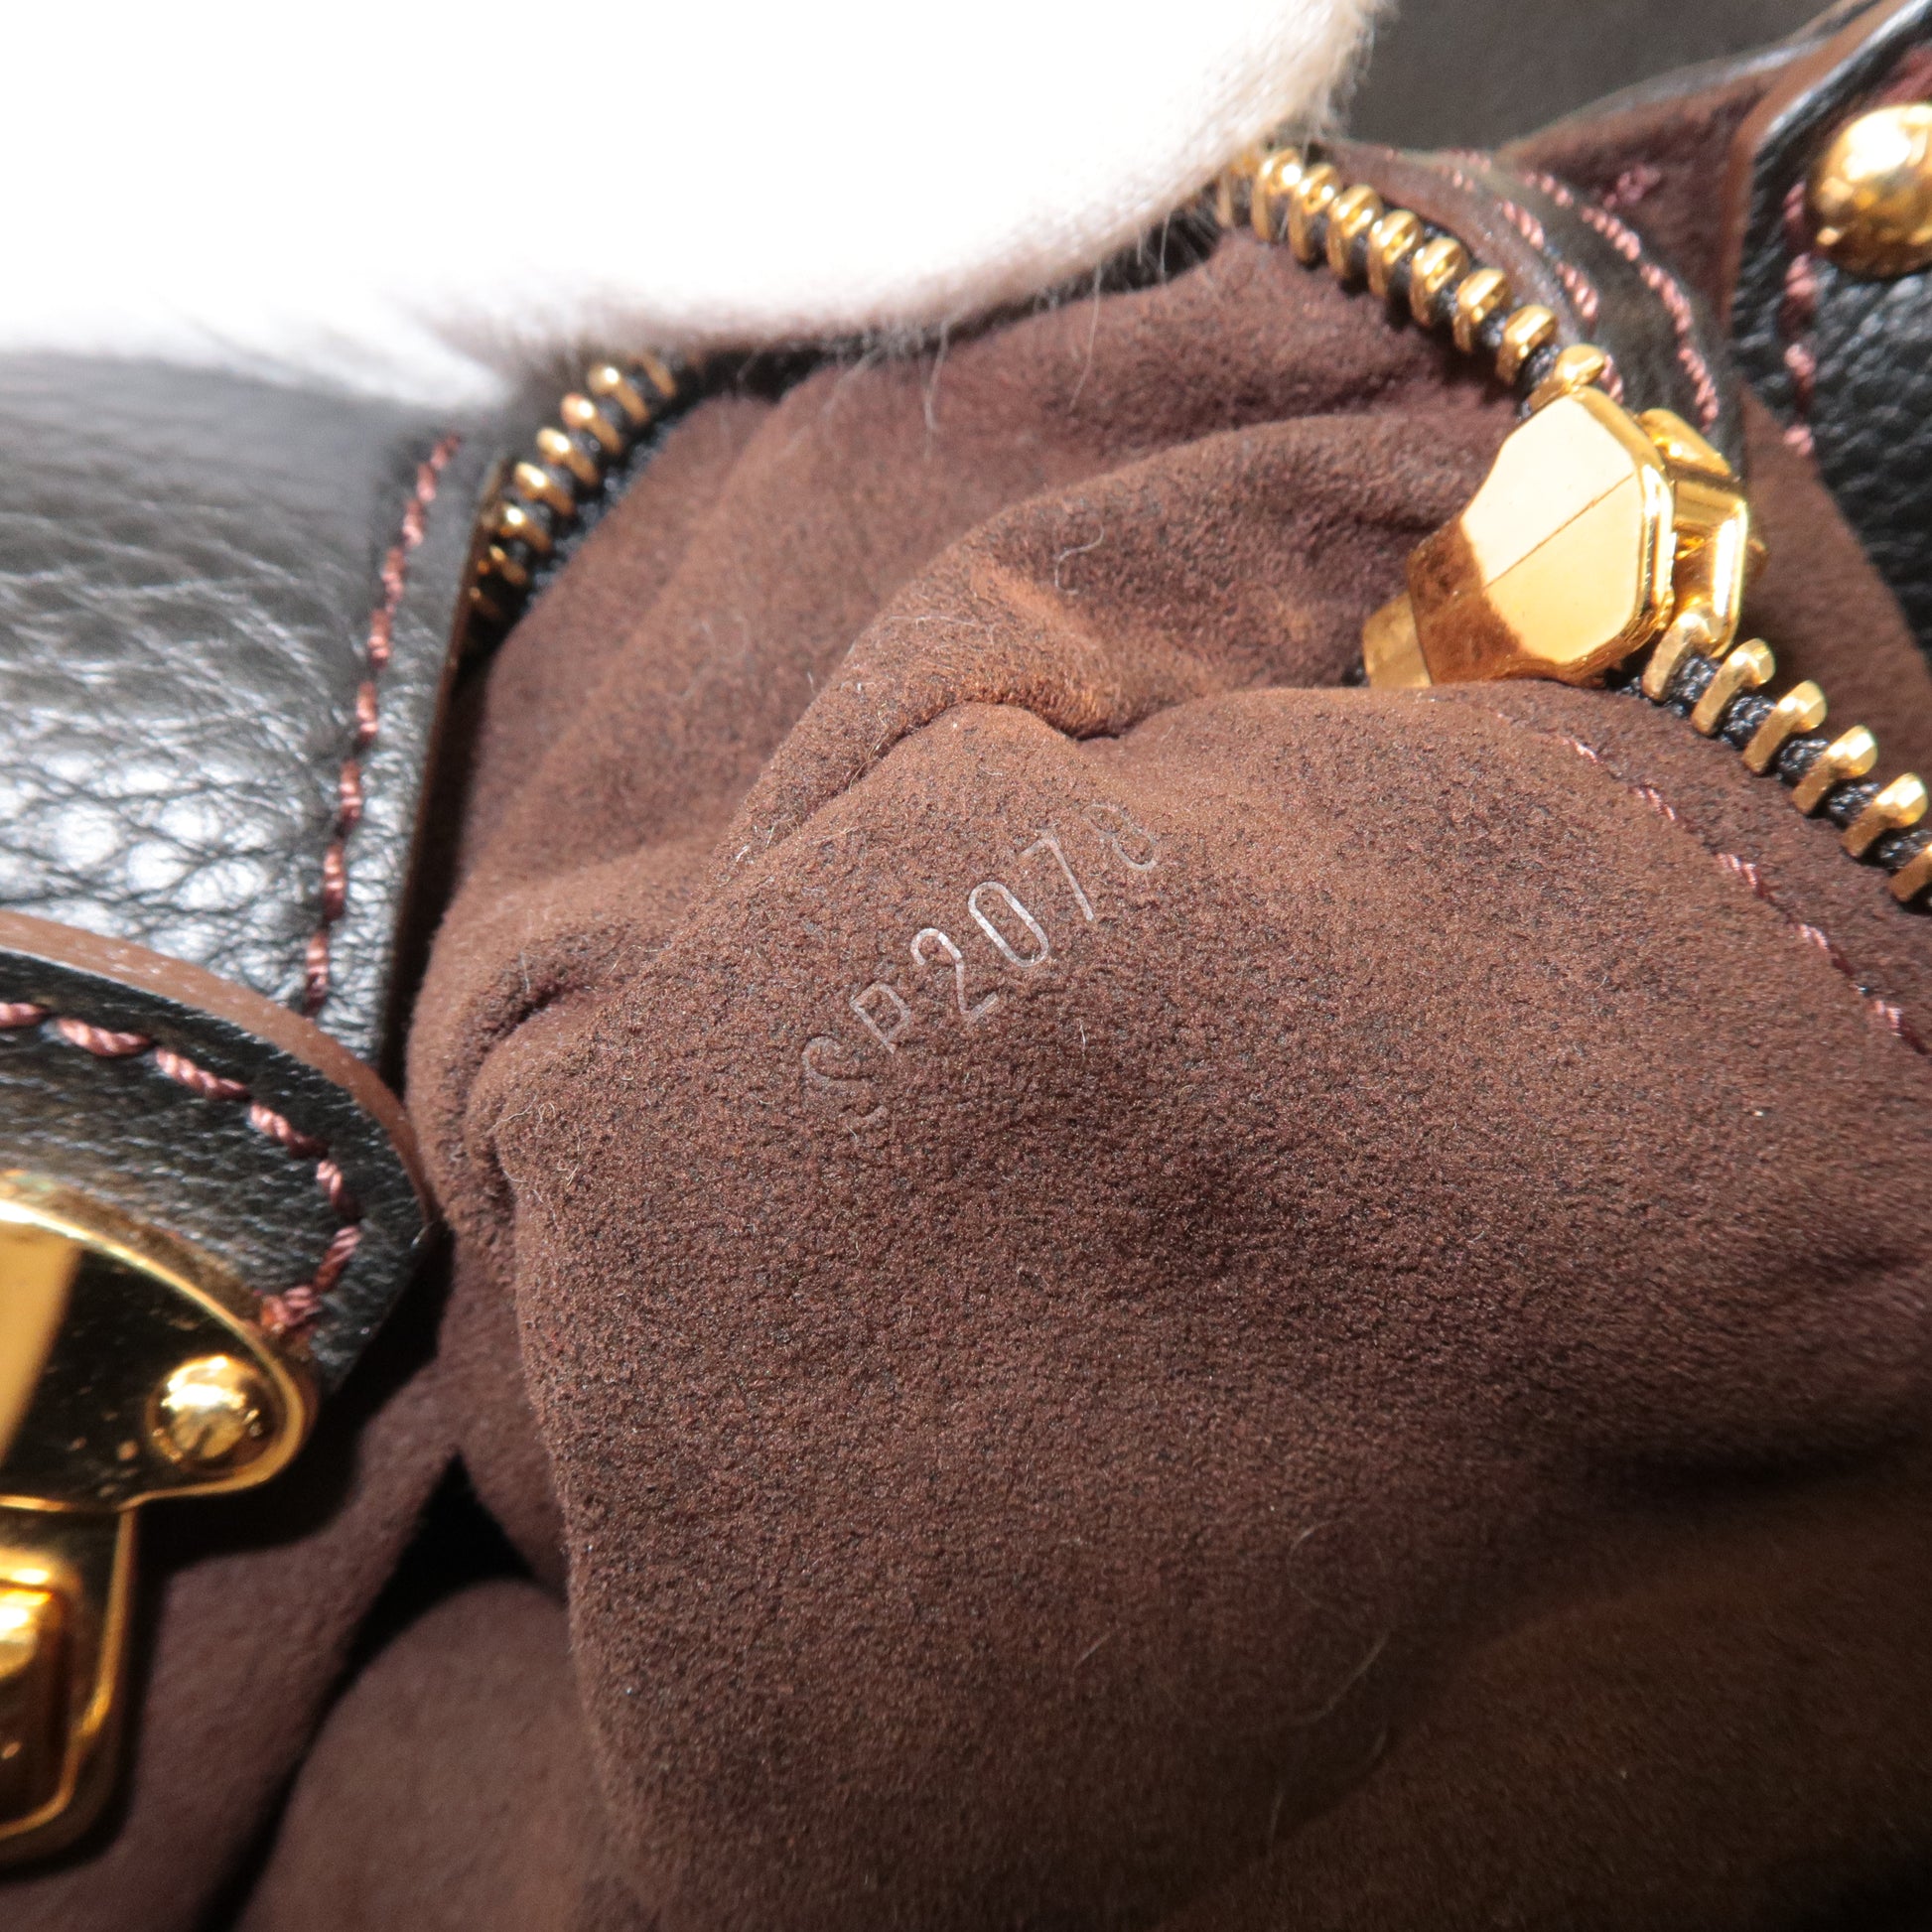 Vuitton Black Mahina Large Bag Preloved - Vintage Lux